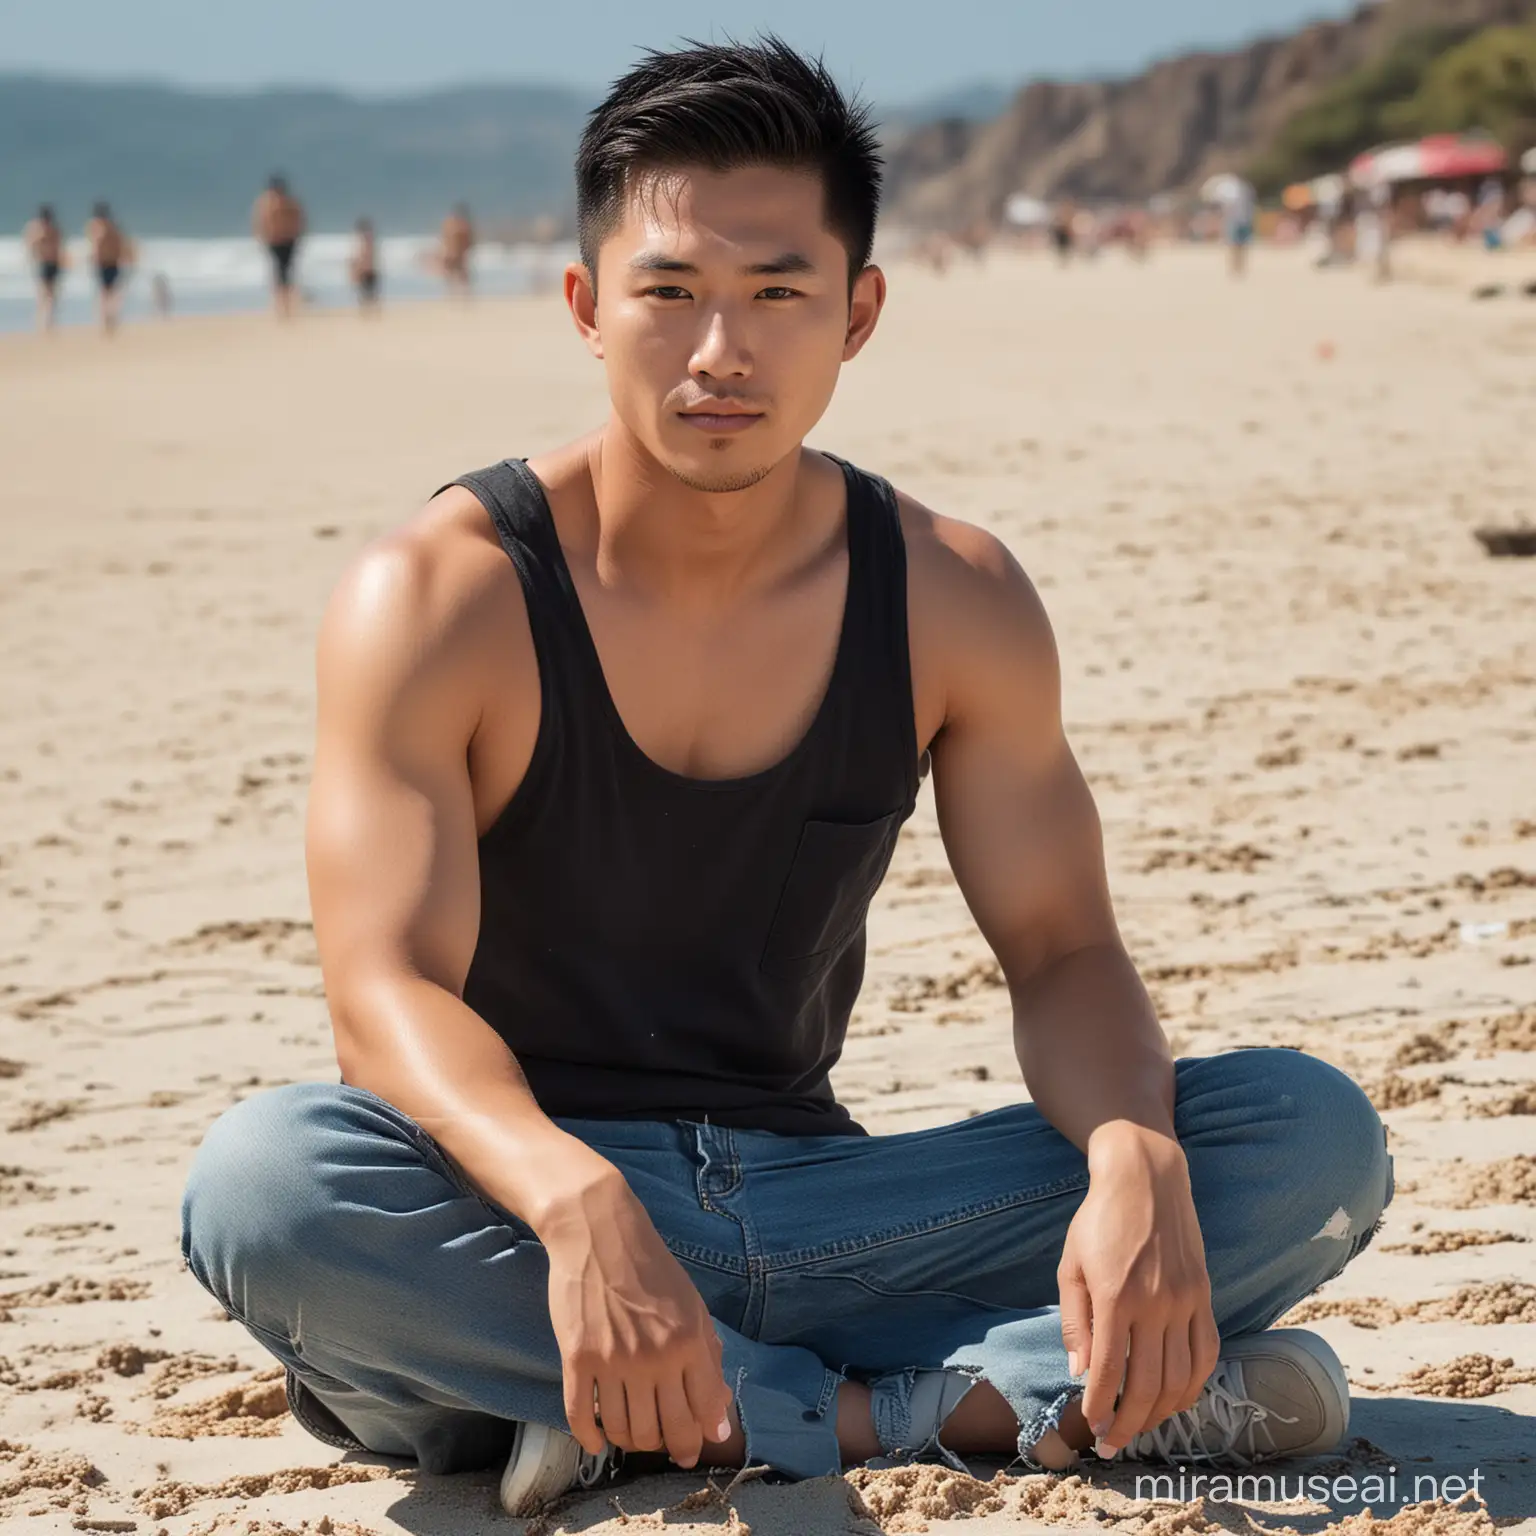 seorang lelaki asia rambut under cut, memakai singlet warna hitam dan celana jeans sedang duduk di tepi pantai siang tengah hari ,dan sangat detail, sangat jernih, resolusi tinggi, penuh warna.